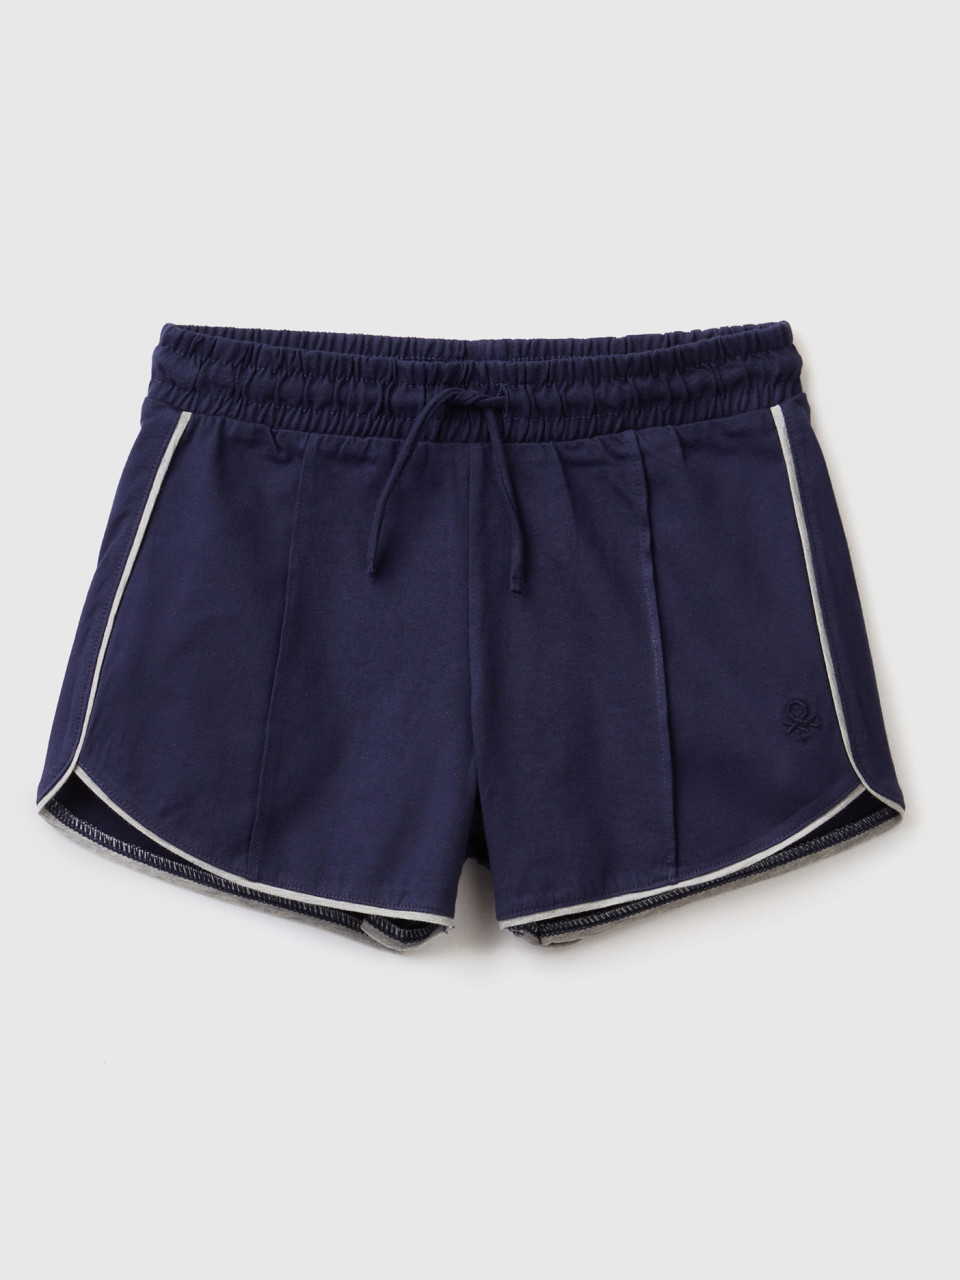 Benetton, 100% Cotton Shorts With Drawstring, Dark Blue, Kids